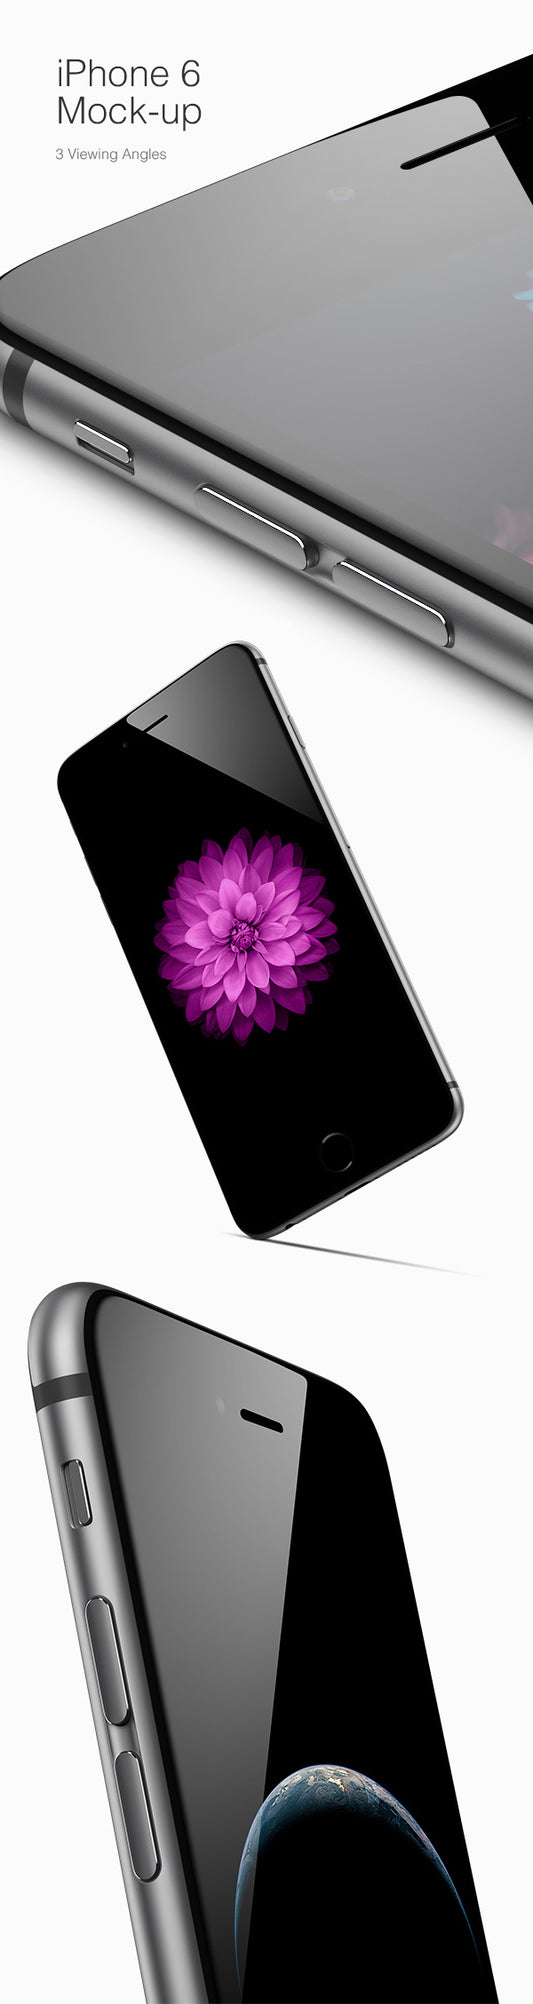 Free Iphone 6 Mockup – 3 Viewing Angles